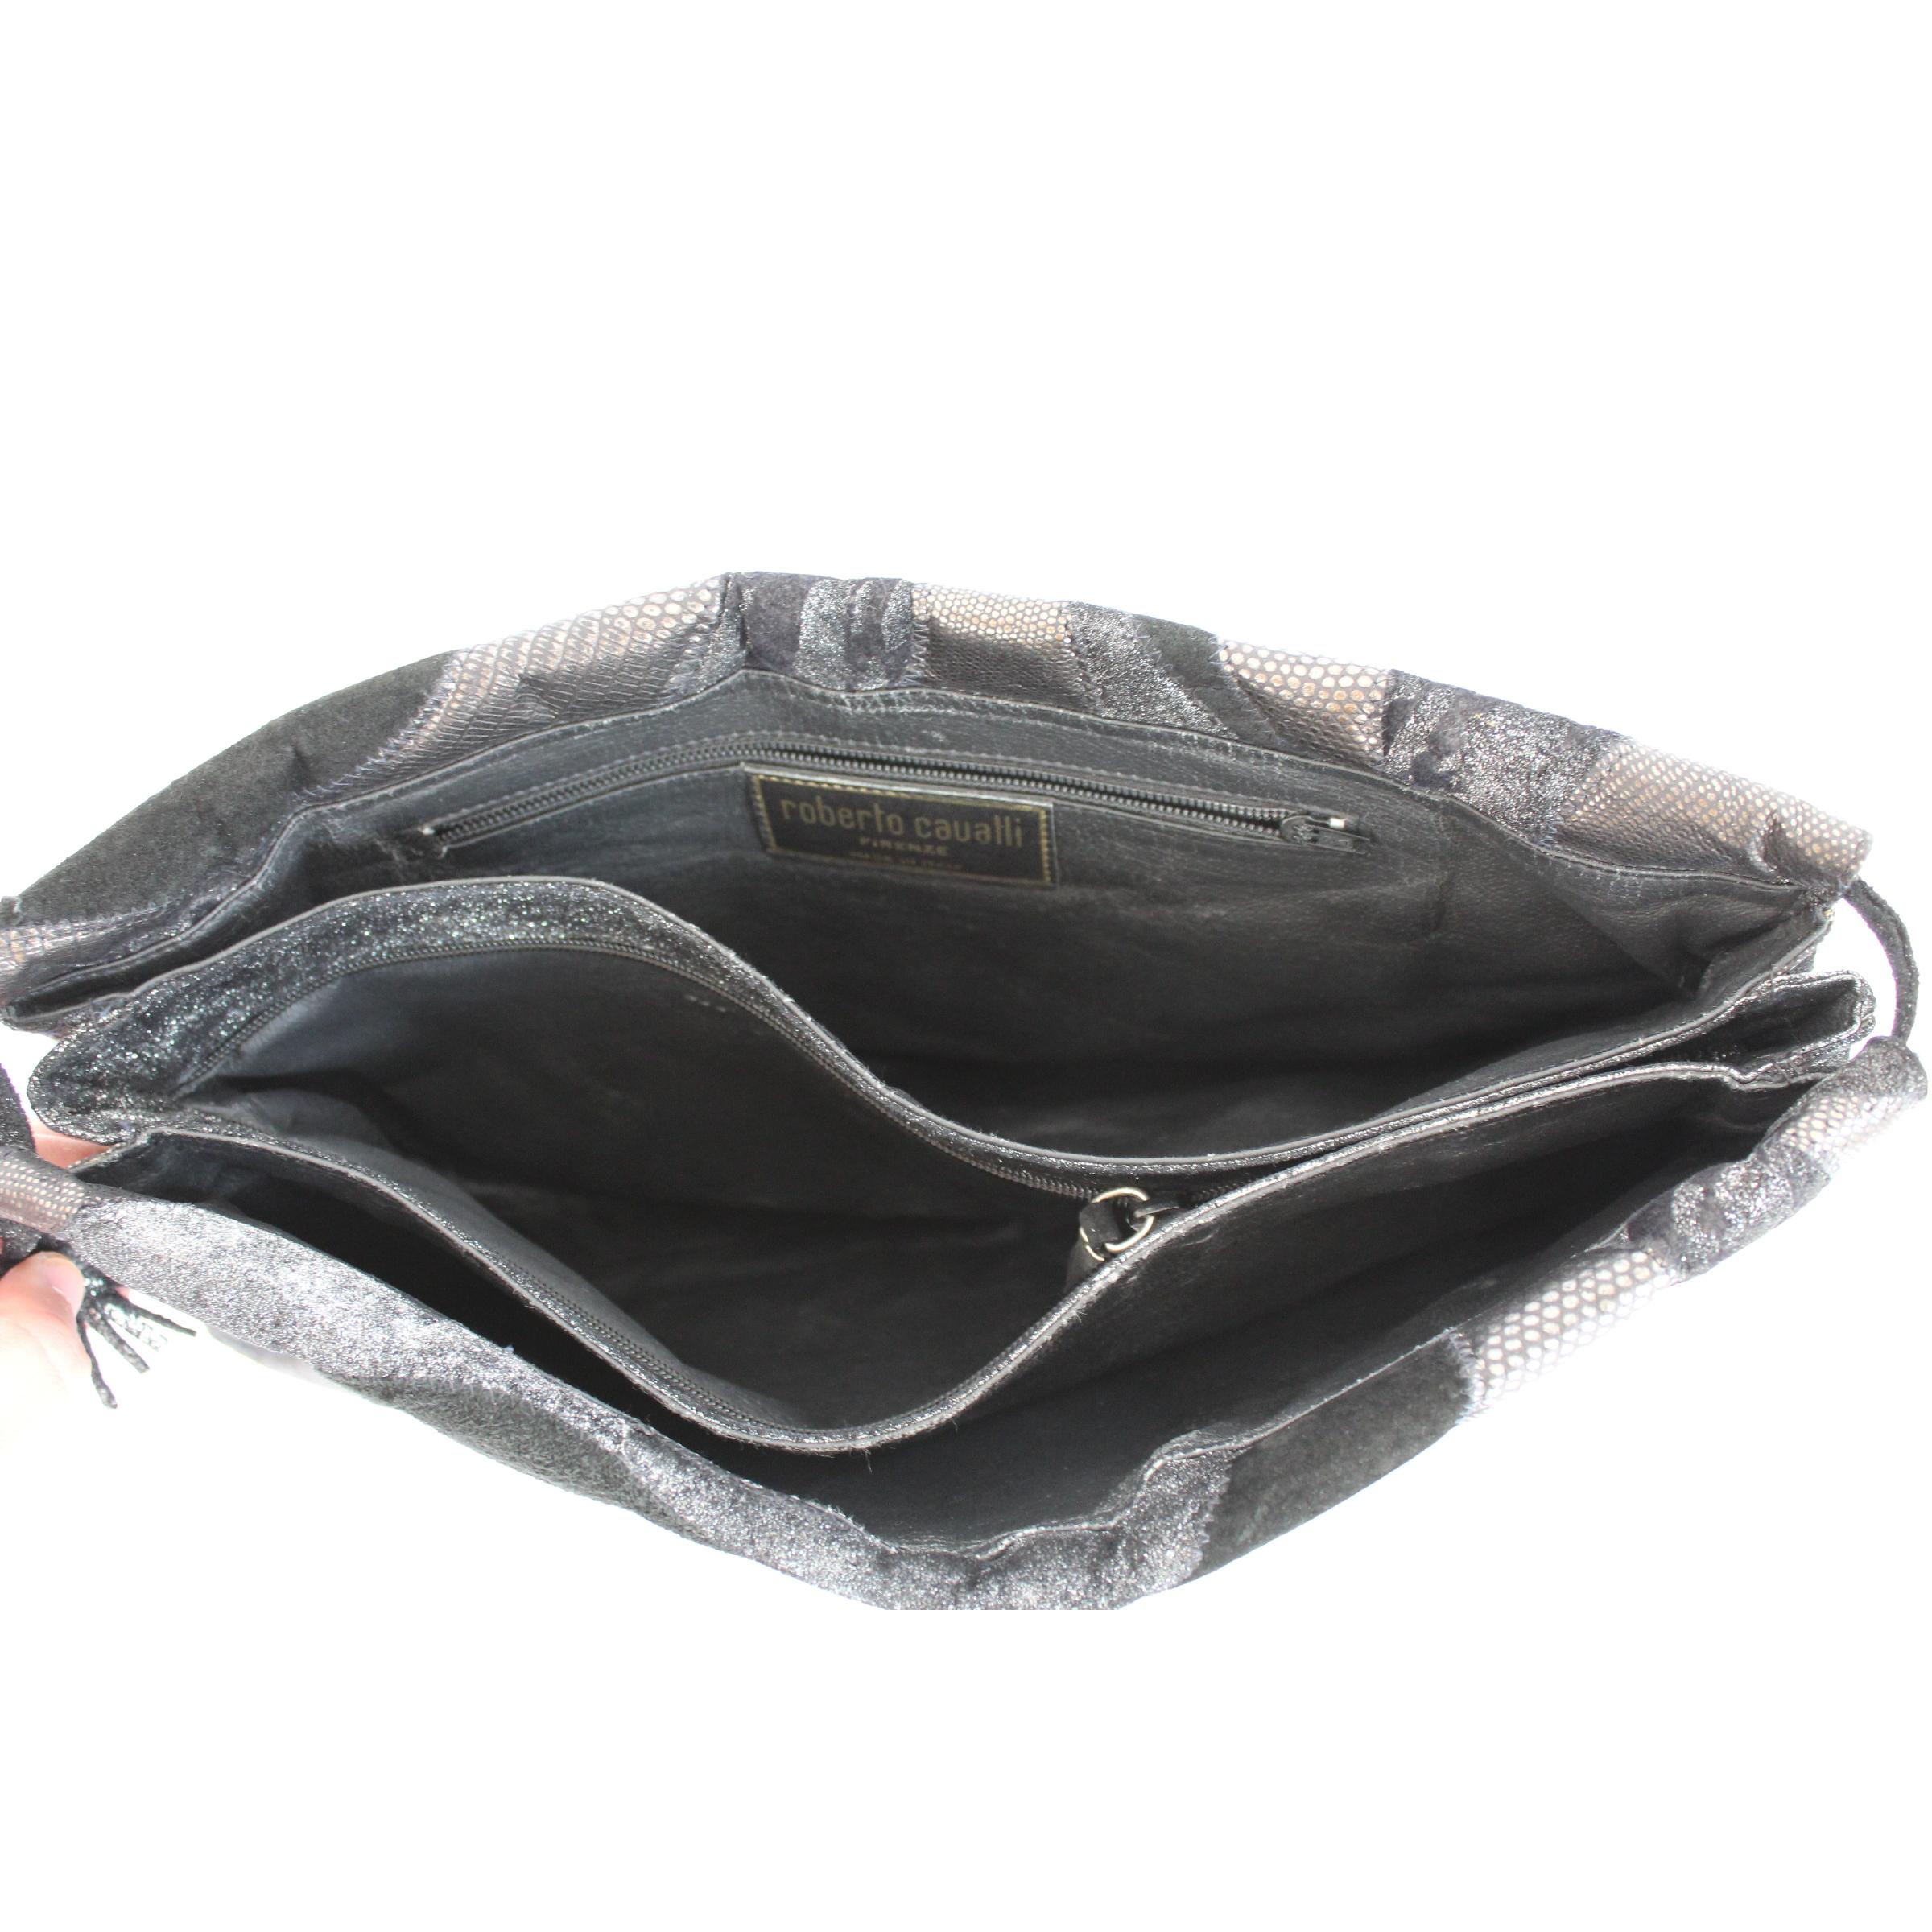 1990s Roberto Cavalli Black Silver Leather Suede Handbag For Sale 4